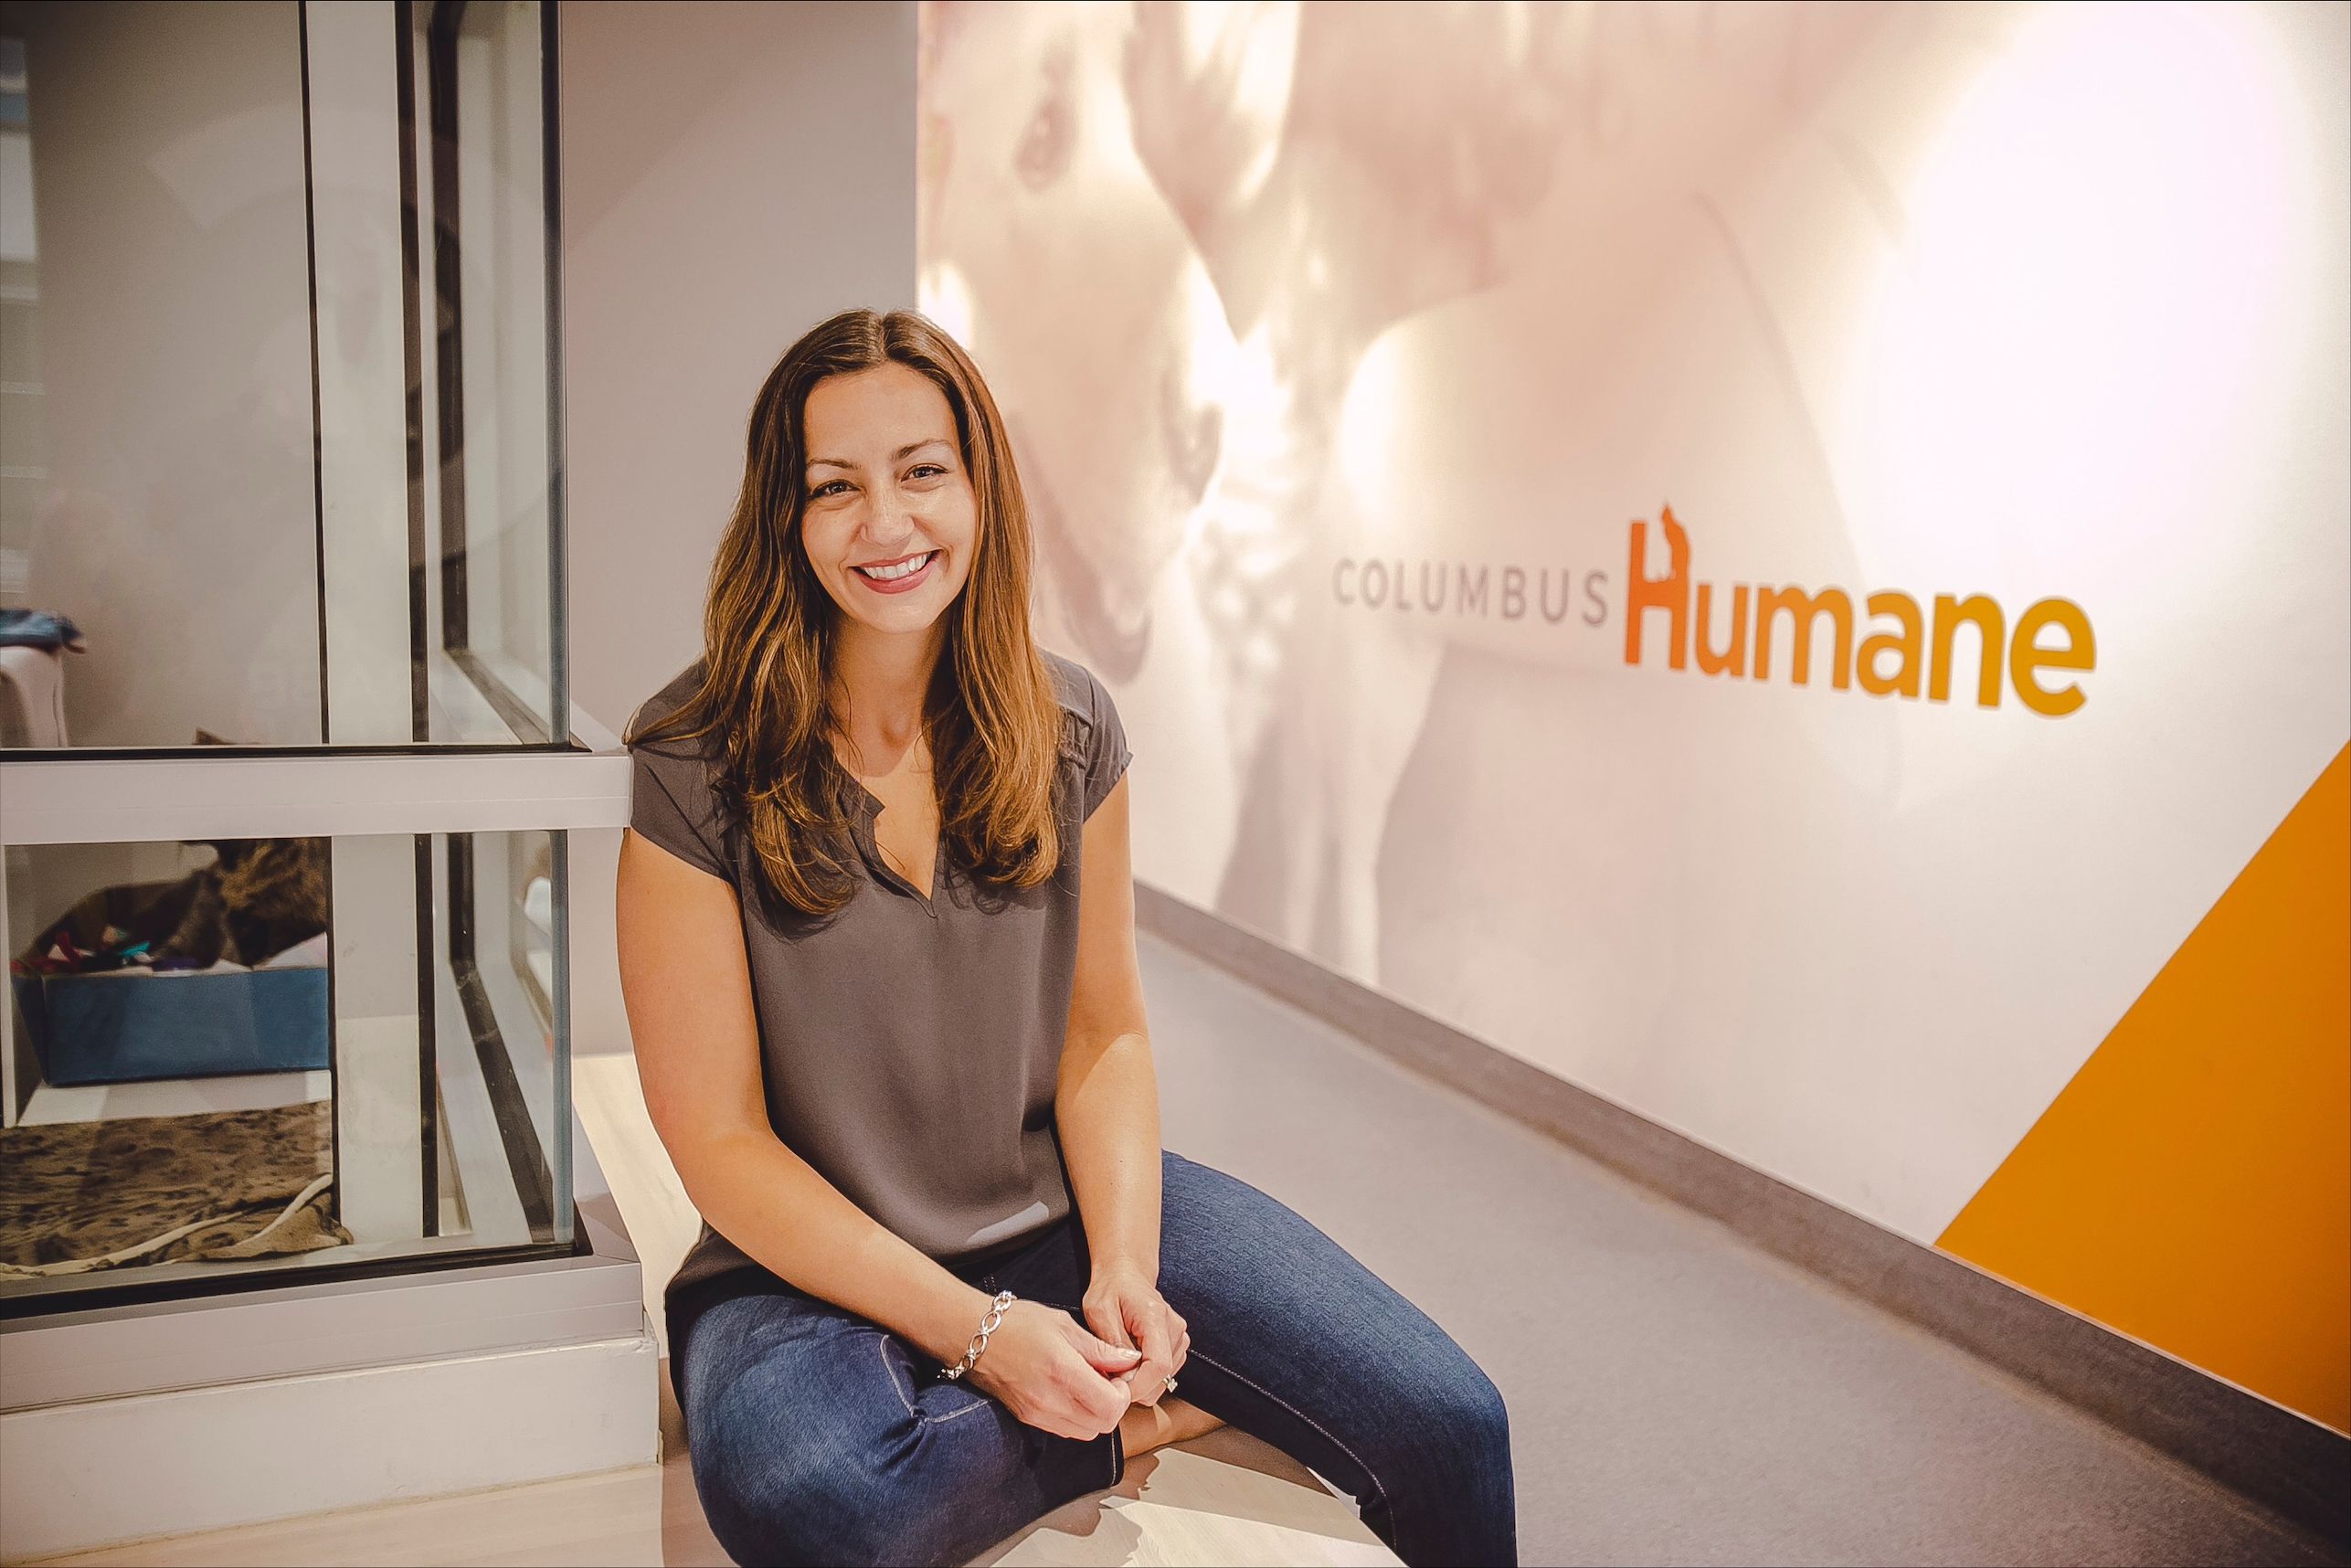 Columbus Humane CEO Rachel Finney sitting at the organization's headquarters.